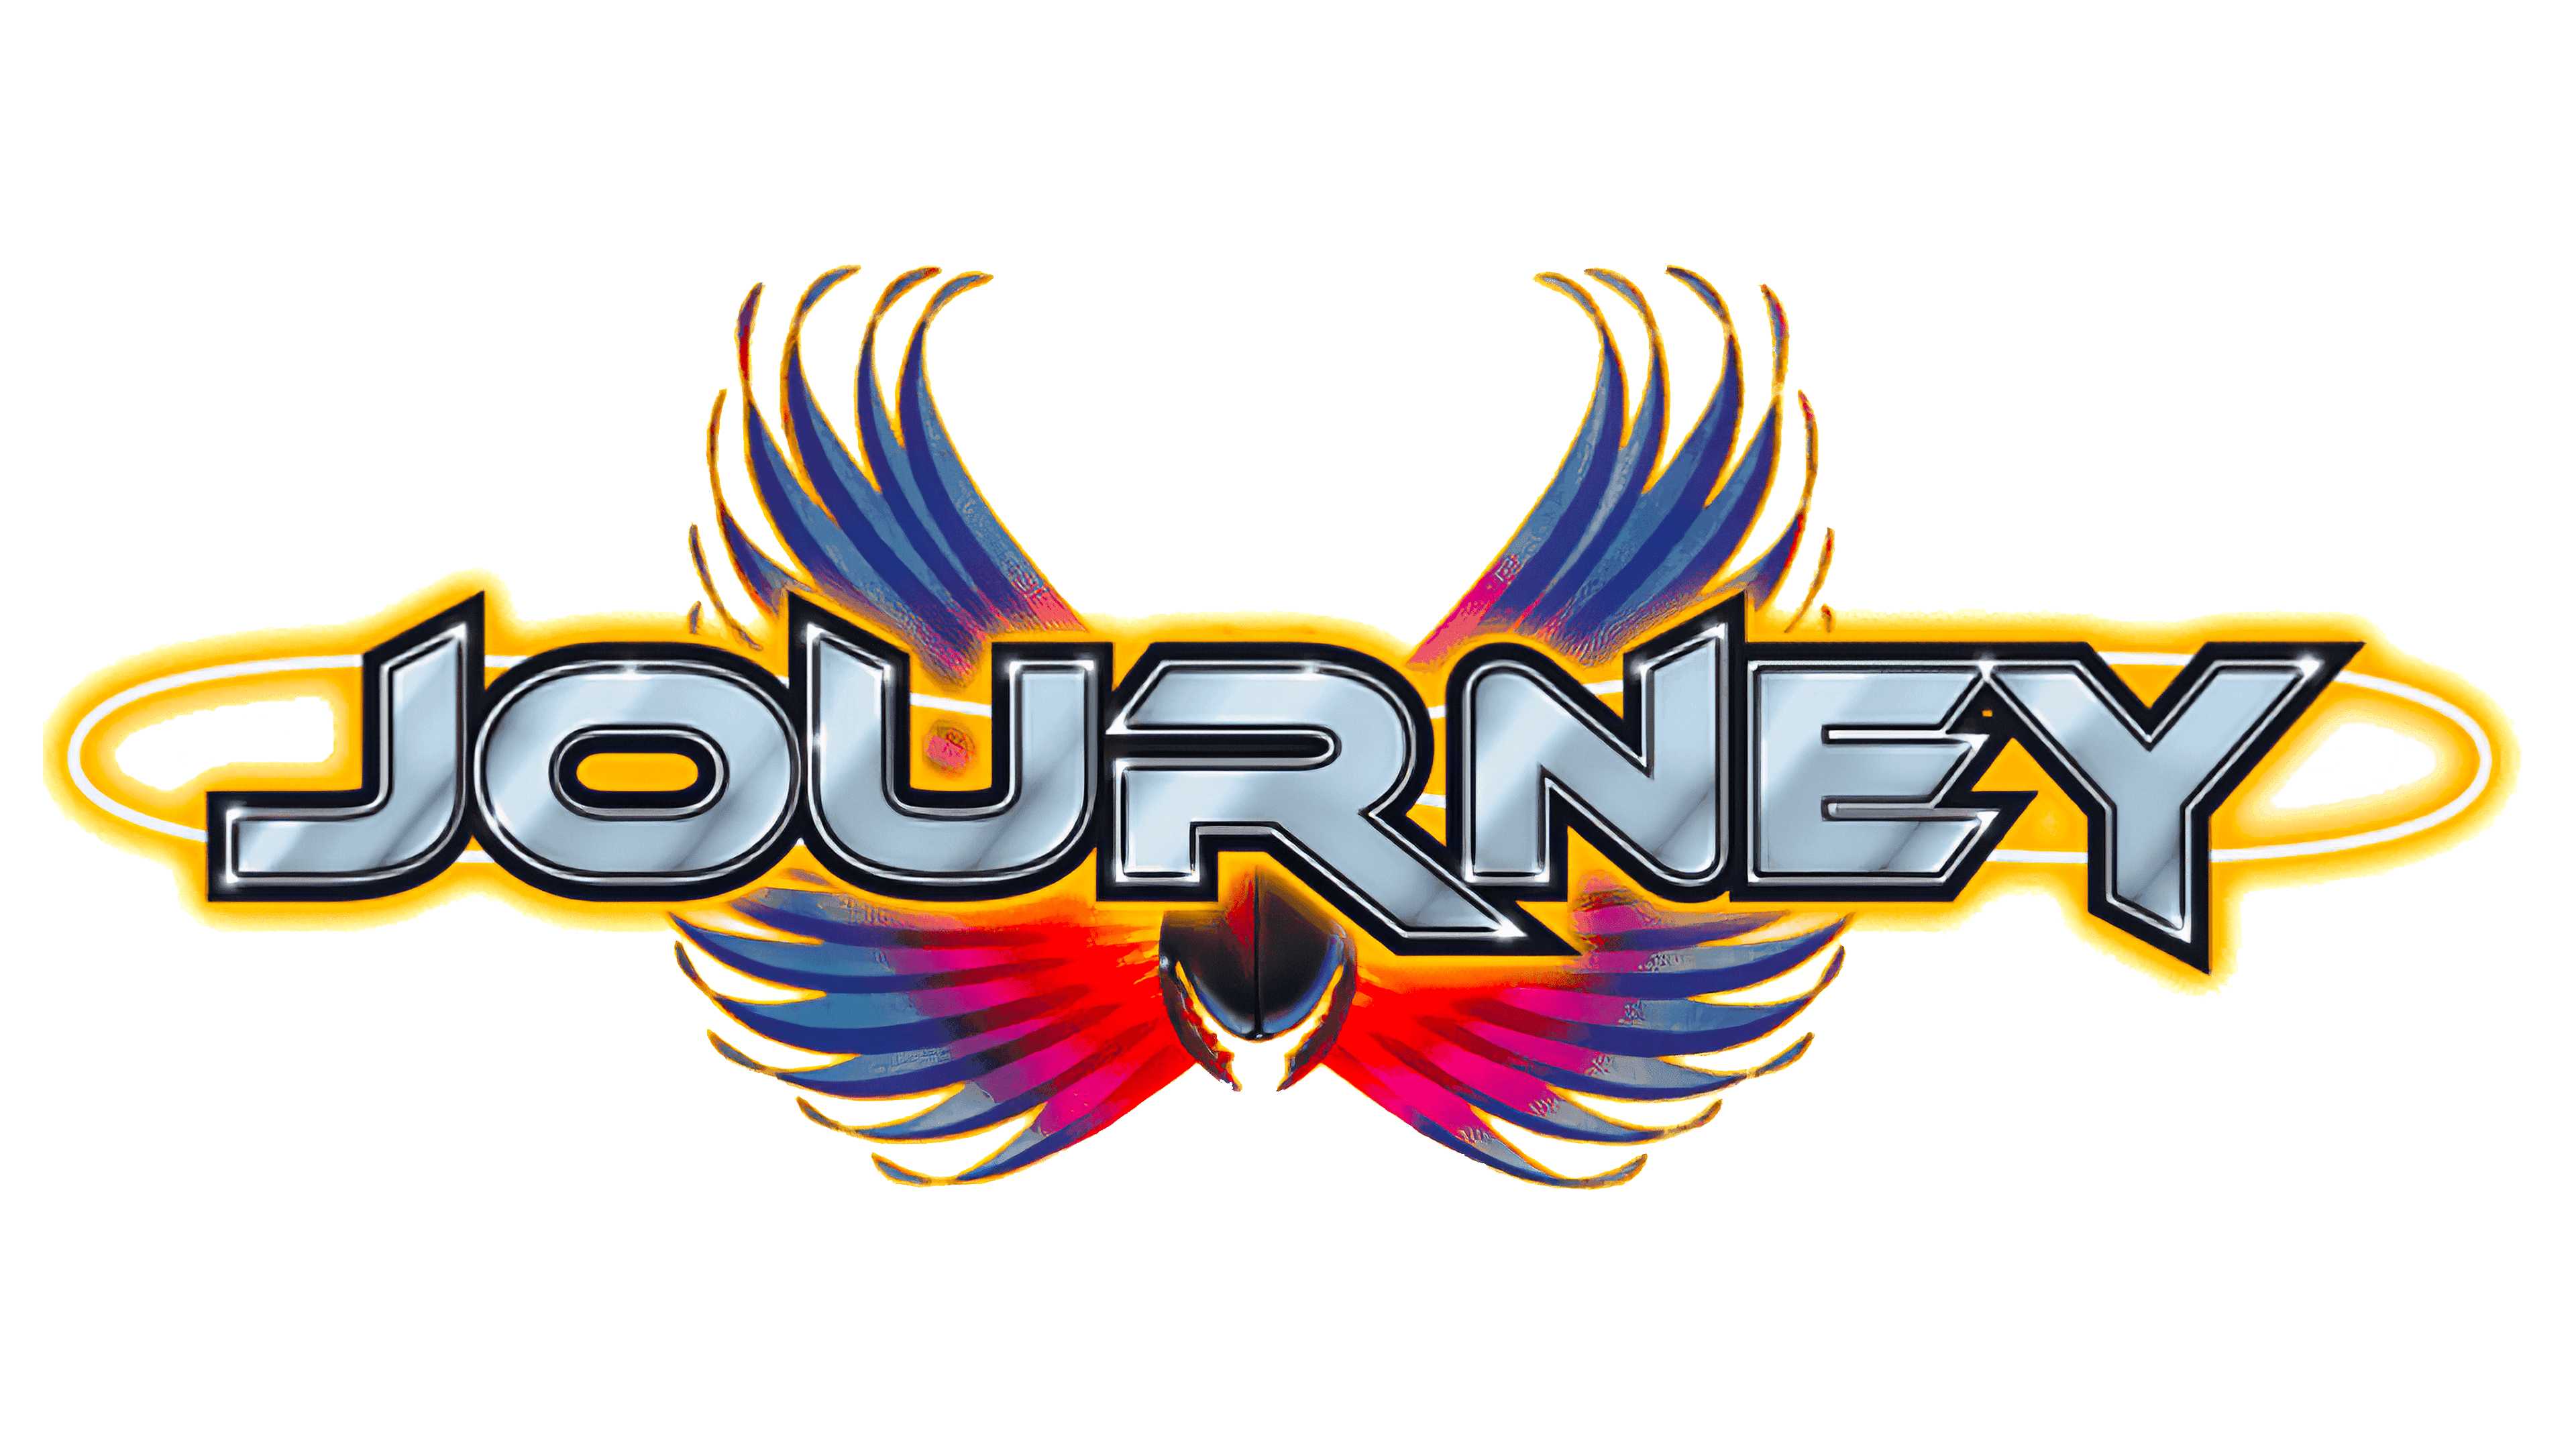 happy journey logo png